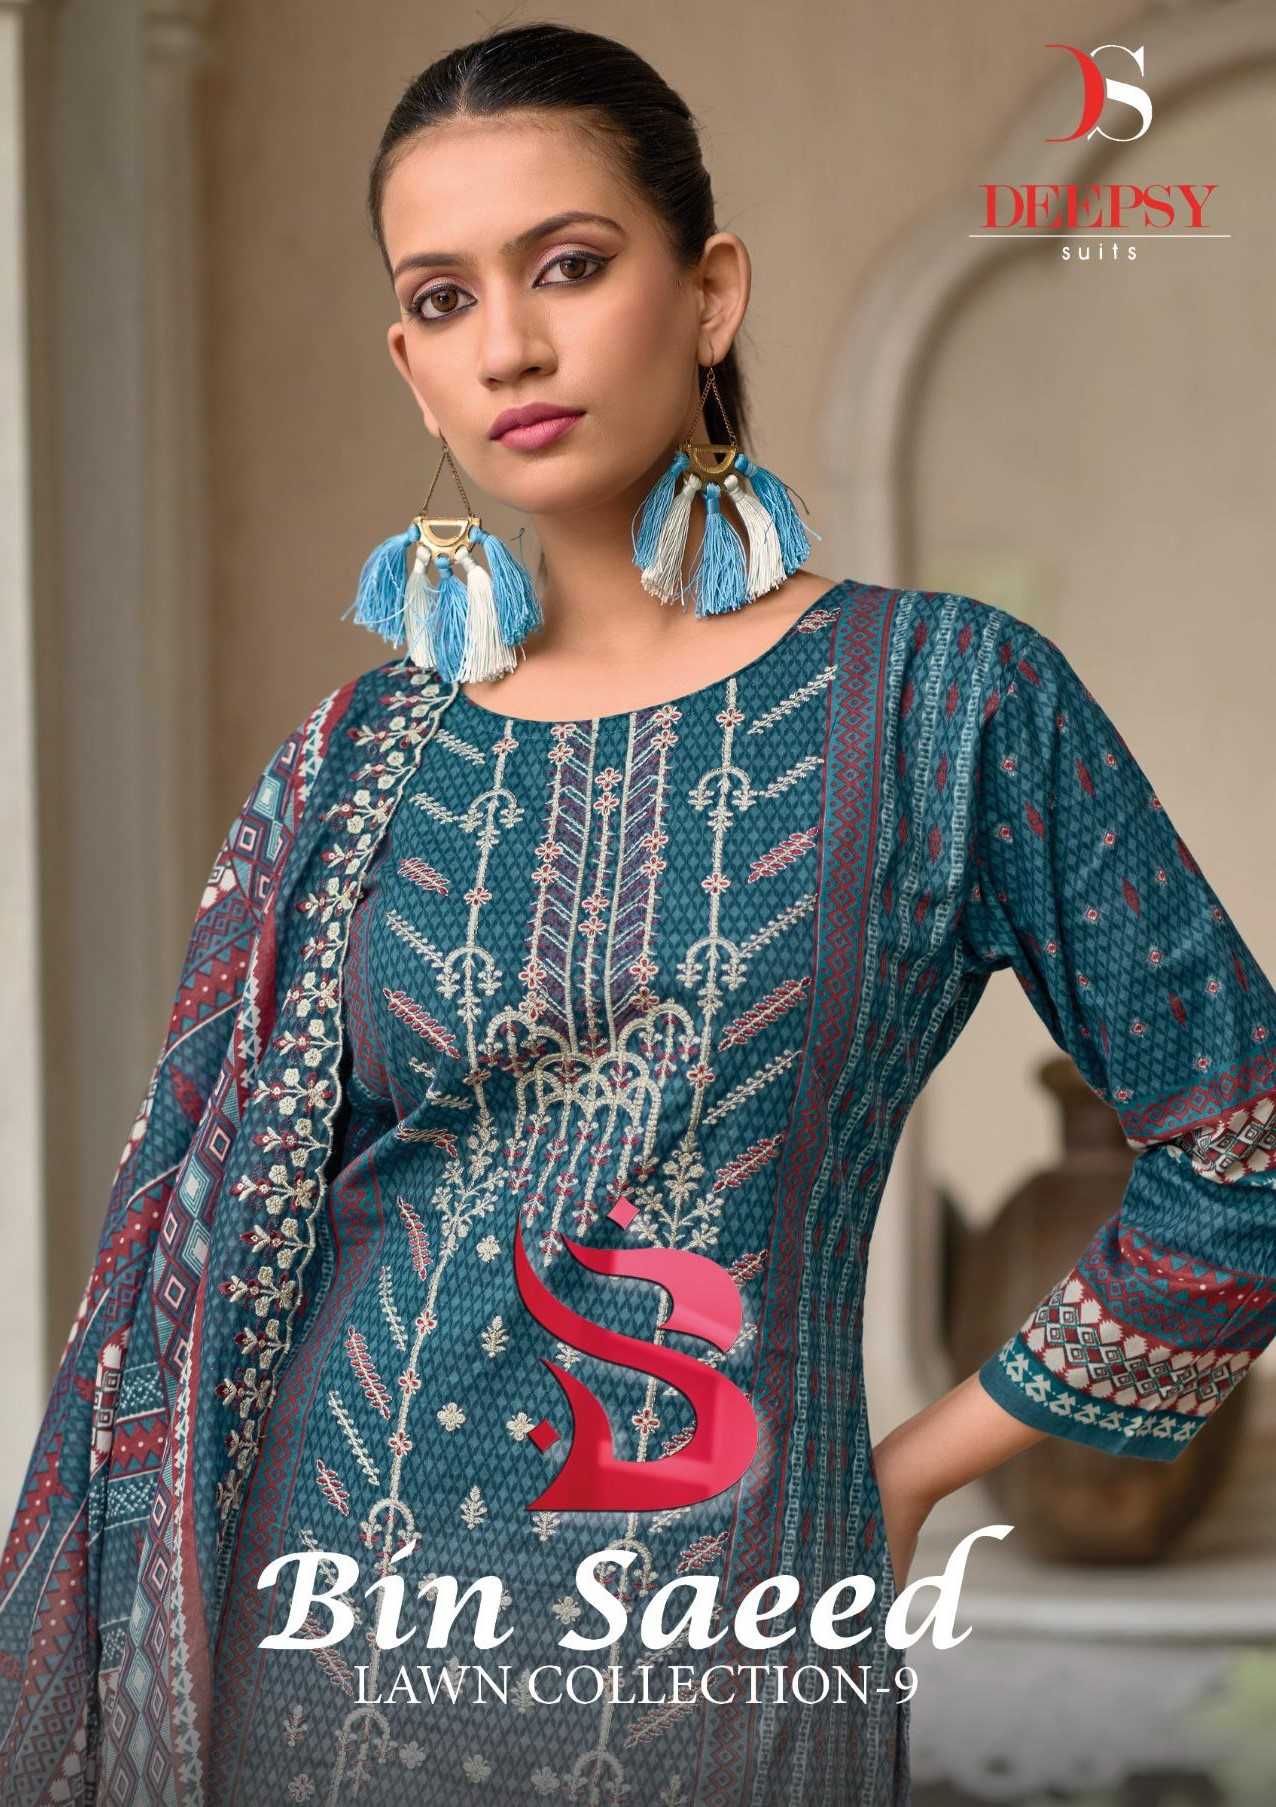 deepsy suits bin saeed lawn collection vol 9 pakistani digita print dress material